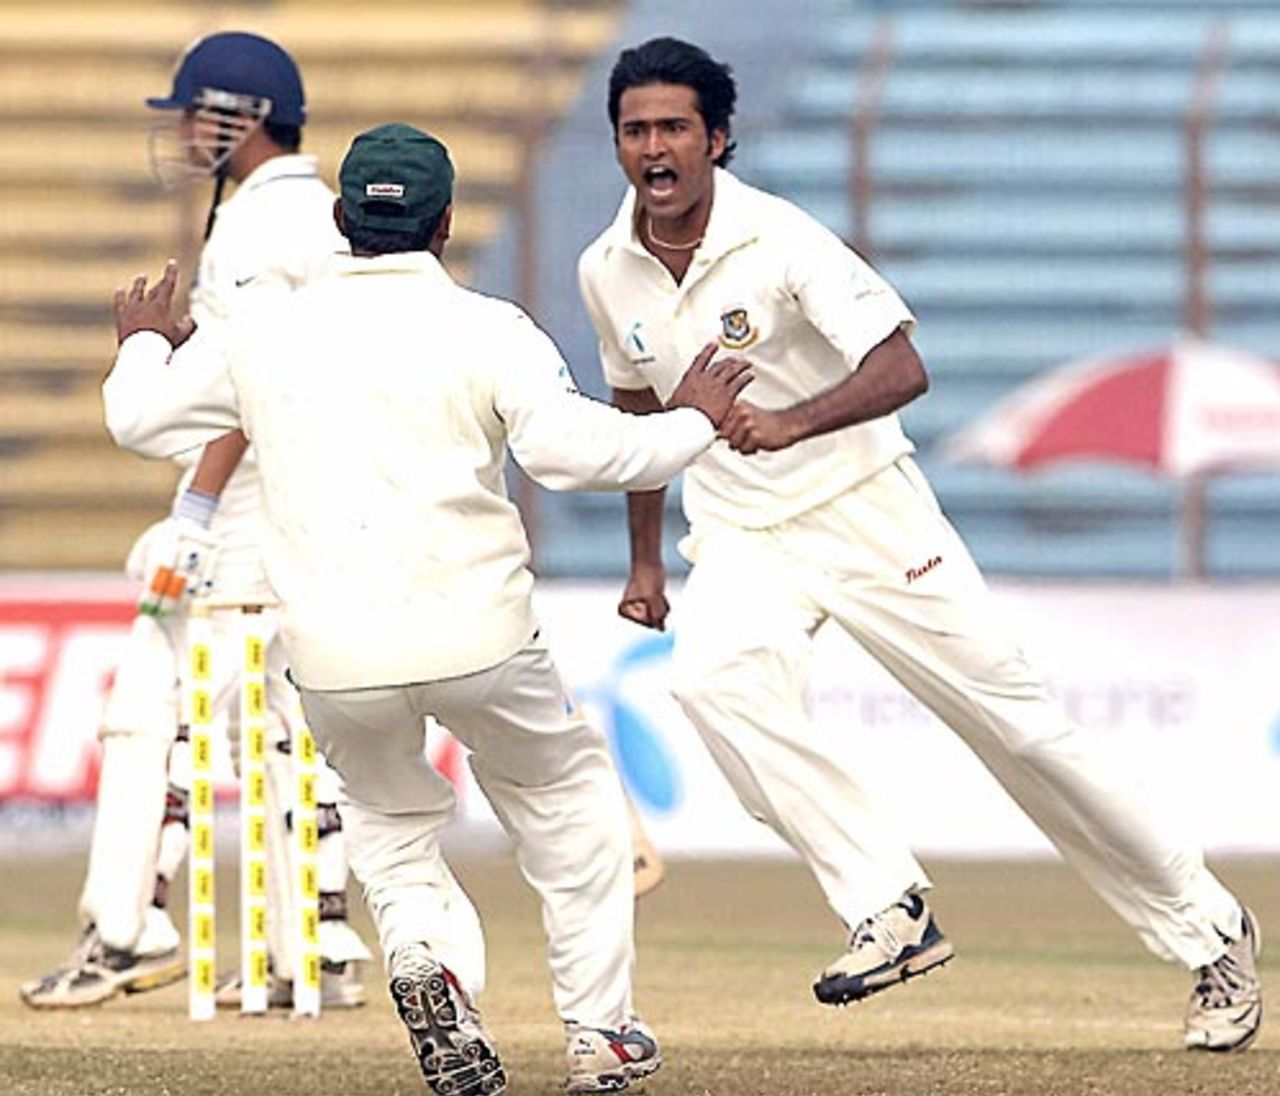 Shahadat Hossain is pumped up after snaring Gautam Gambhir, Bangladesh v India, 1st Test, Chittagong, 1st day, January 17, 2010